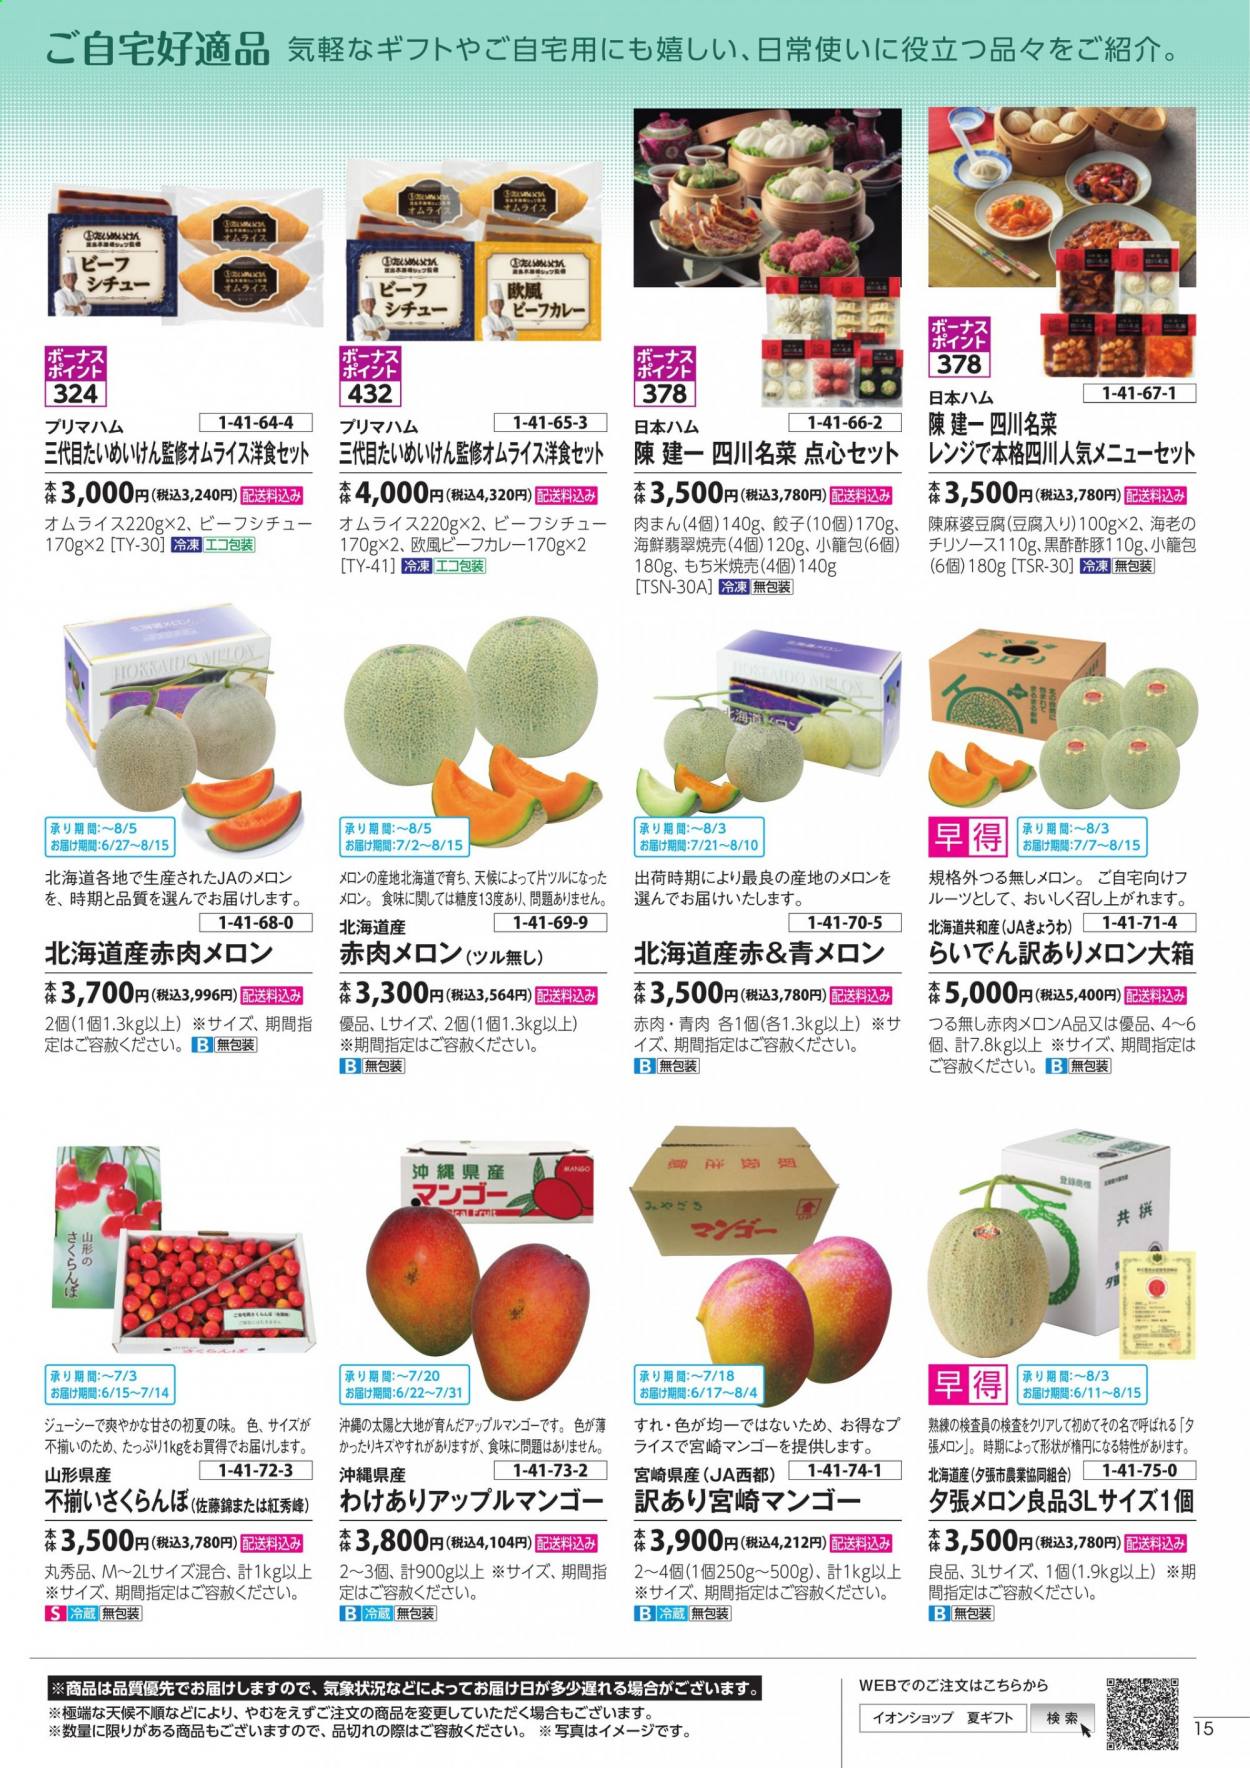 thumbnail - イオンチラシ - 2021年5月8日 - 2021年7月12日 - セール製品 - きのこ, 米, 豆腐, 餃子, メロン。ページ15。